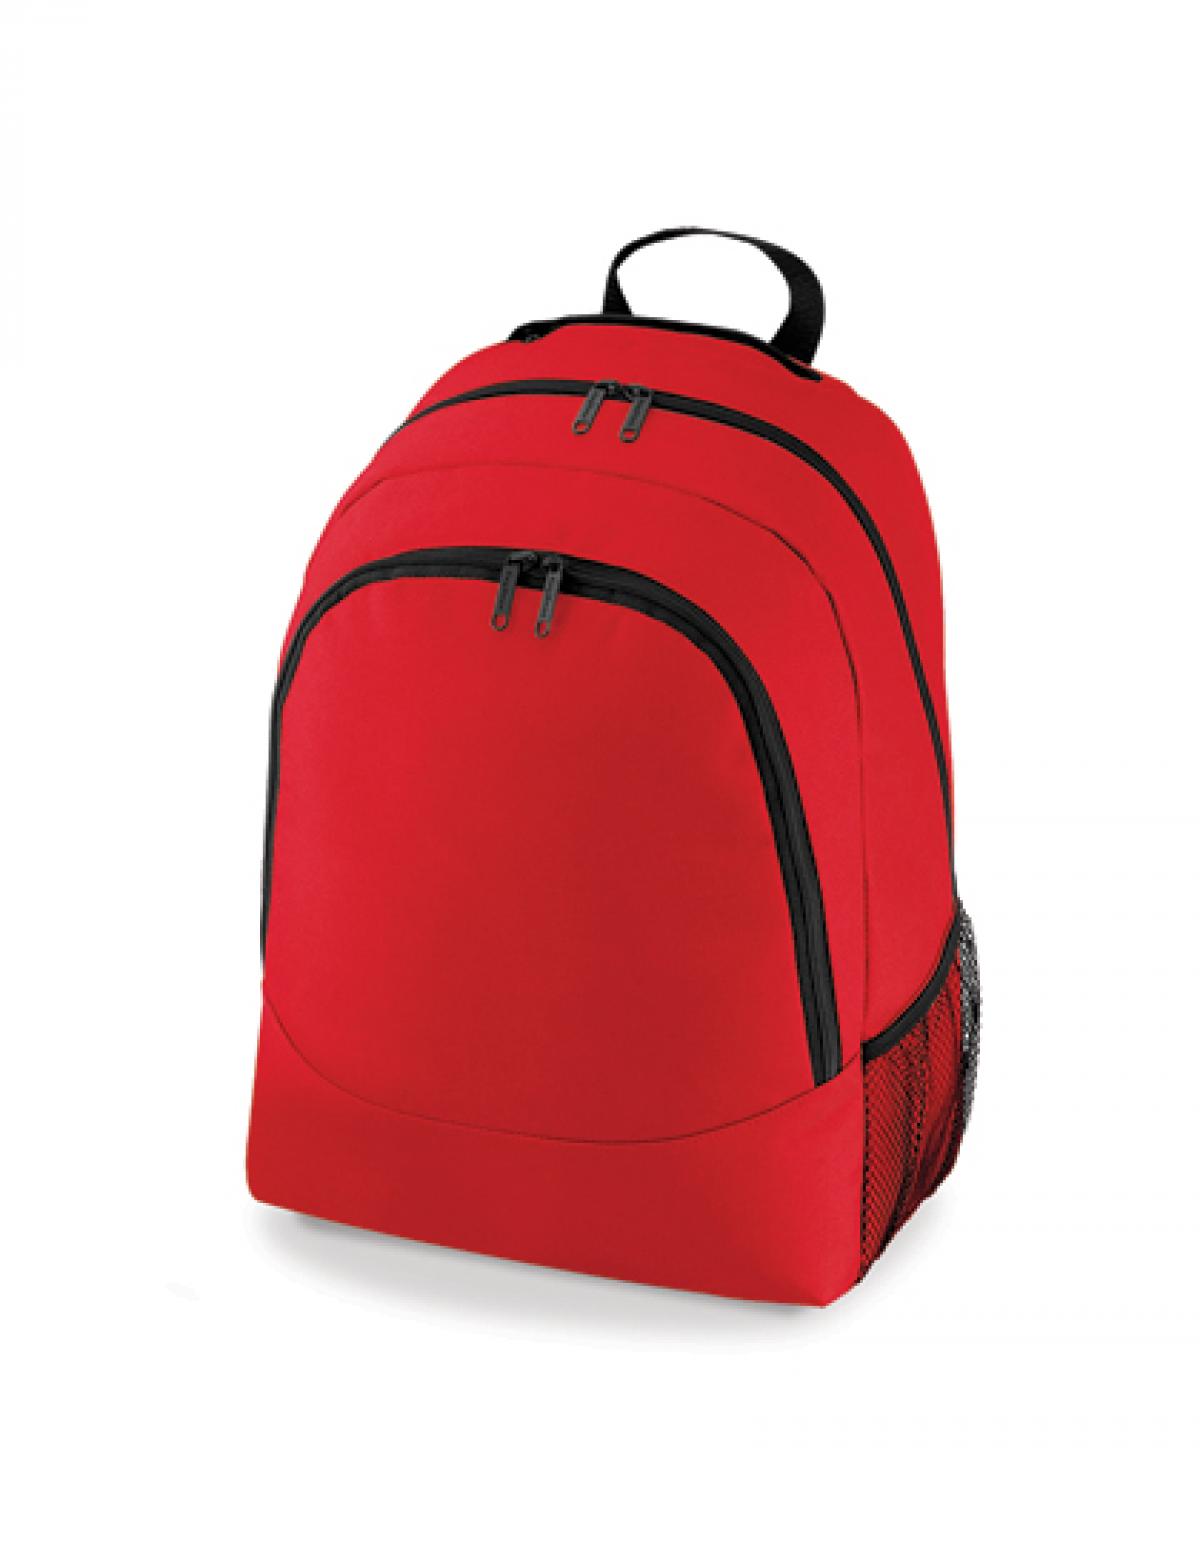 Universal Backpack Rucksack30 x 42 x 20 cmBagBase 